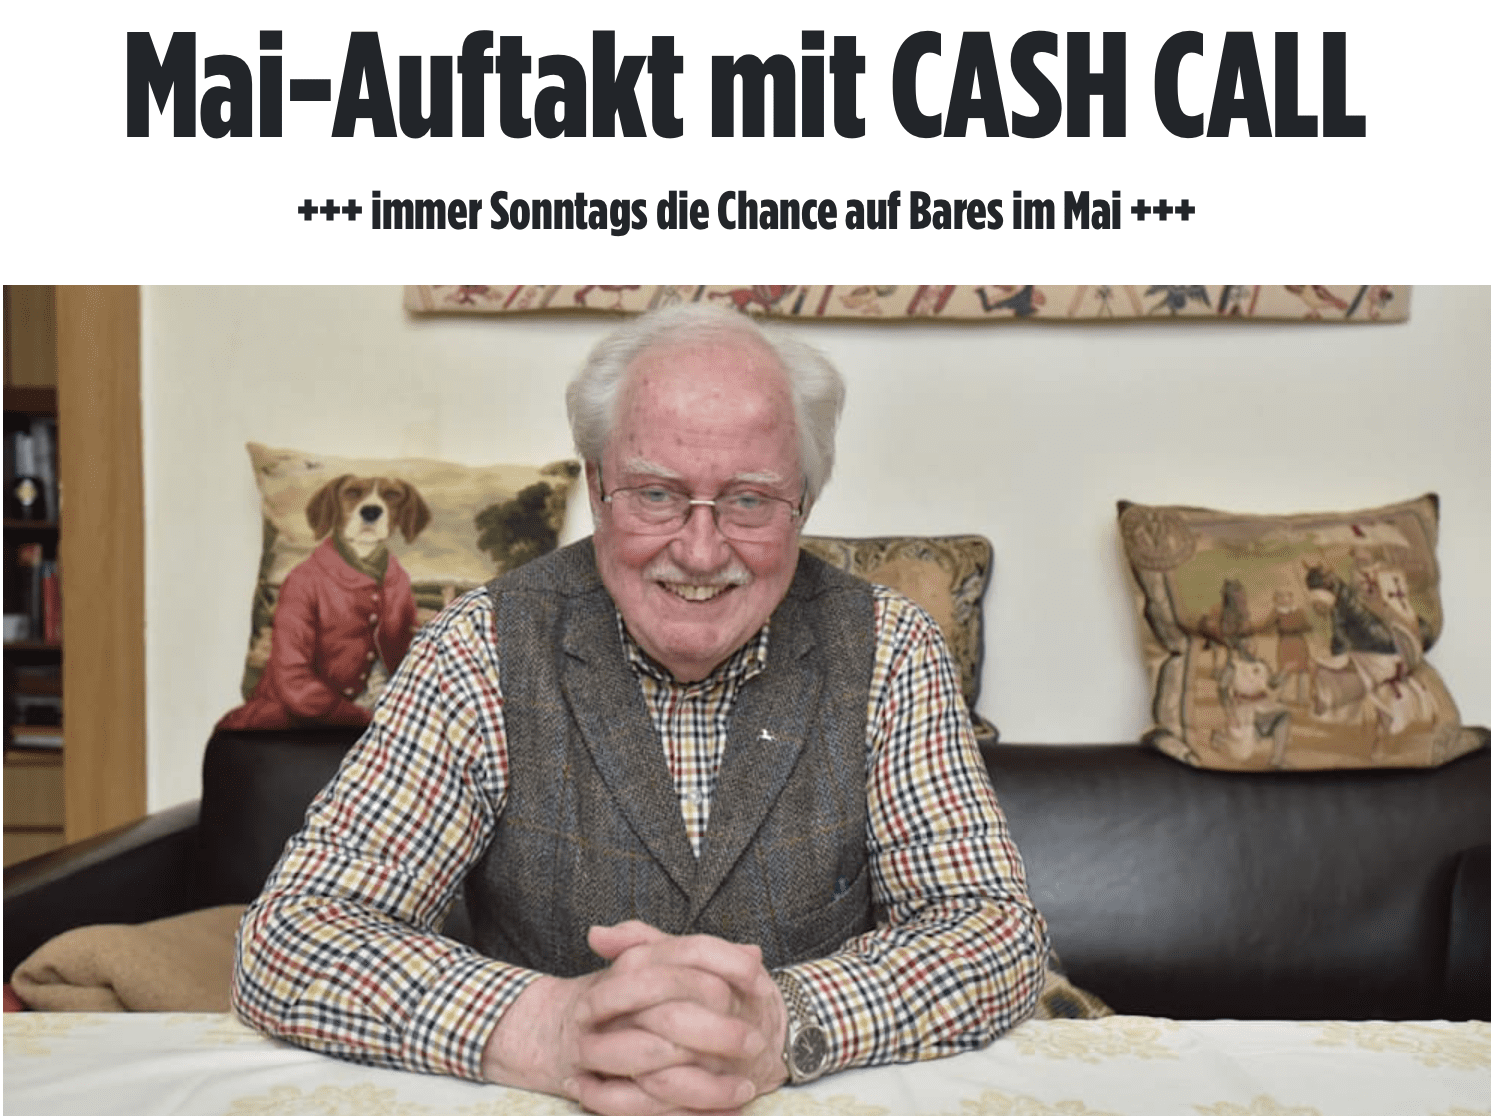 Cash Call von BamS